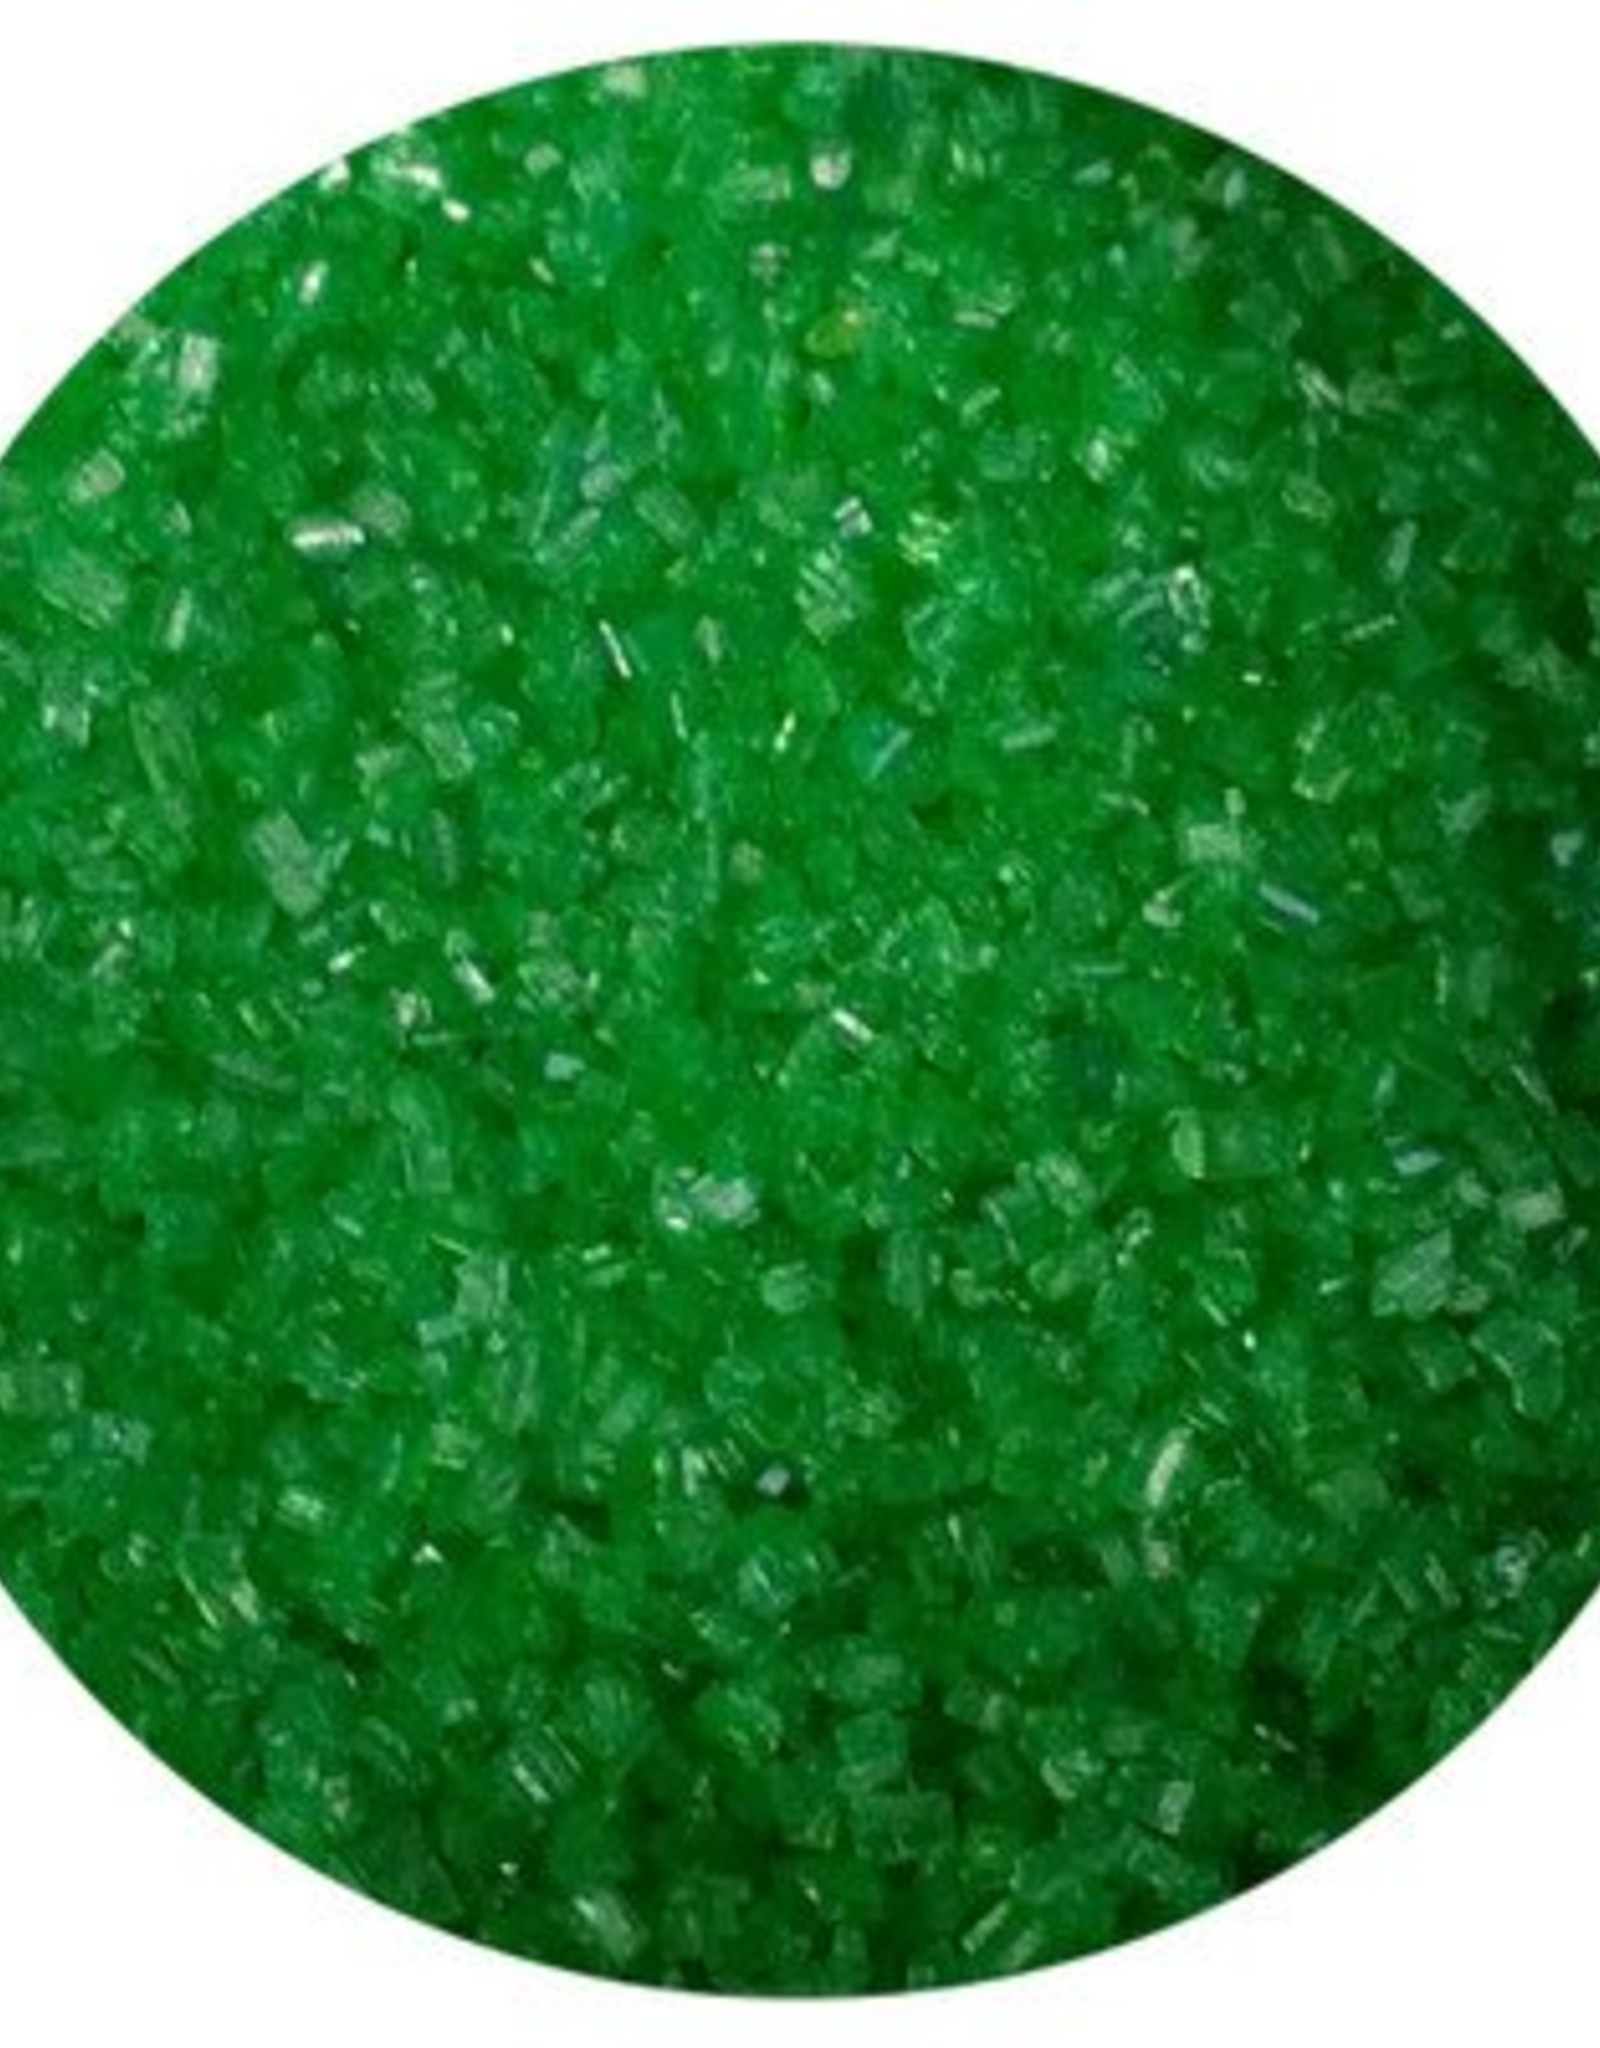 Green (Emerald) Sanding Sugar